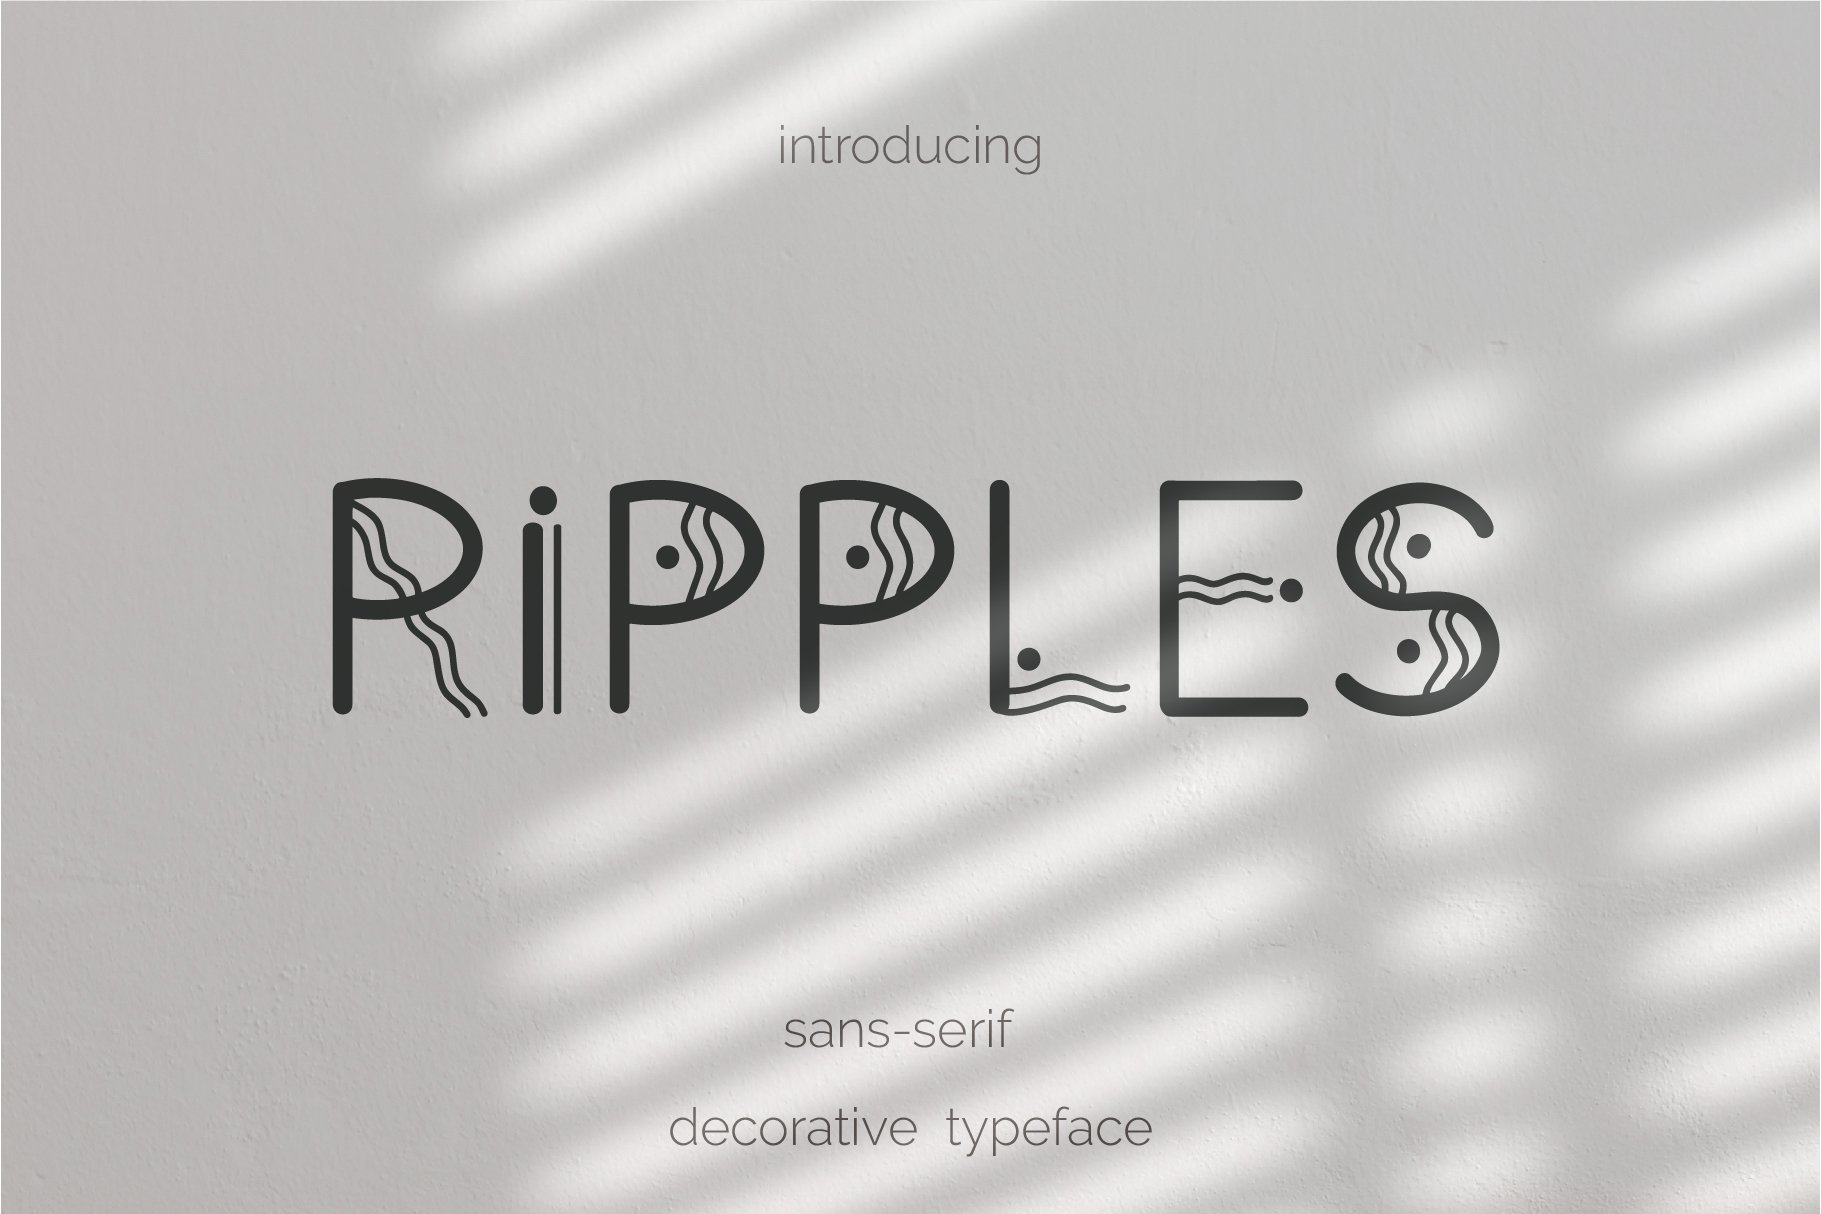 Ripple. Bohemian Sans Serif Typeface cover image.